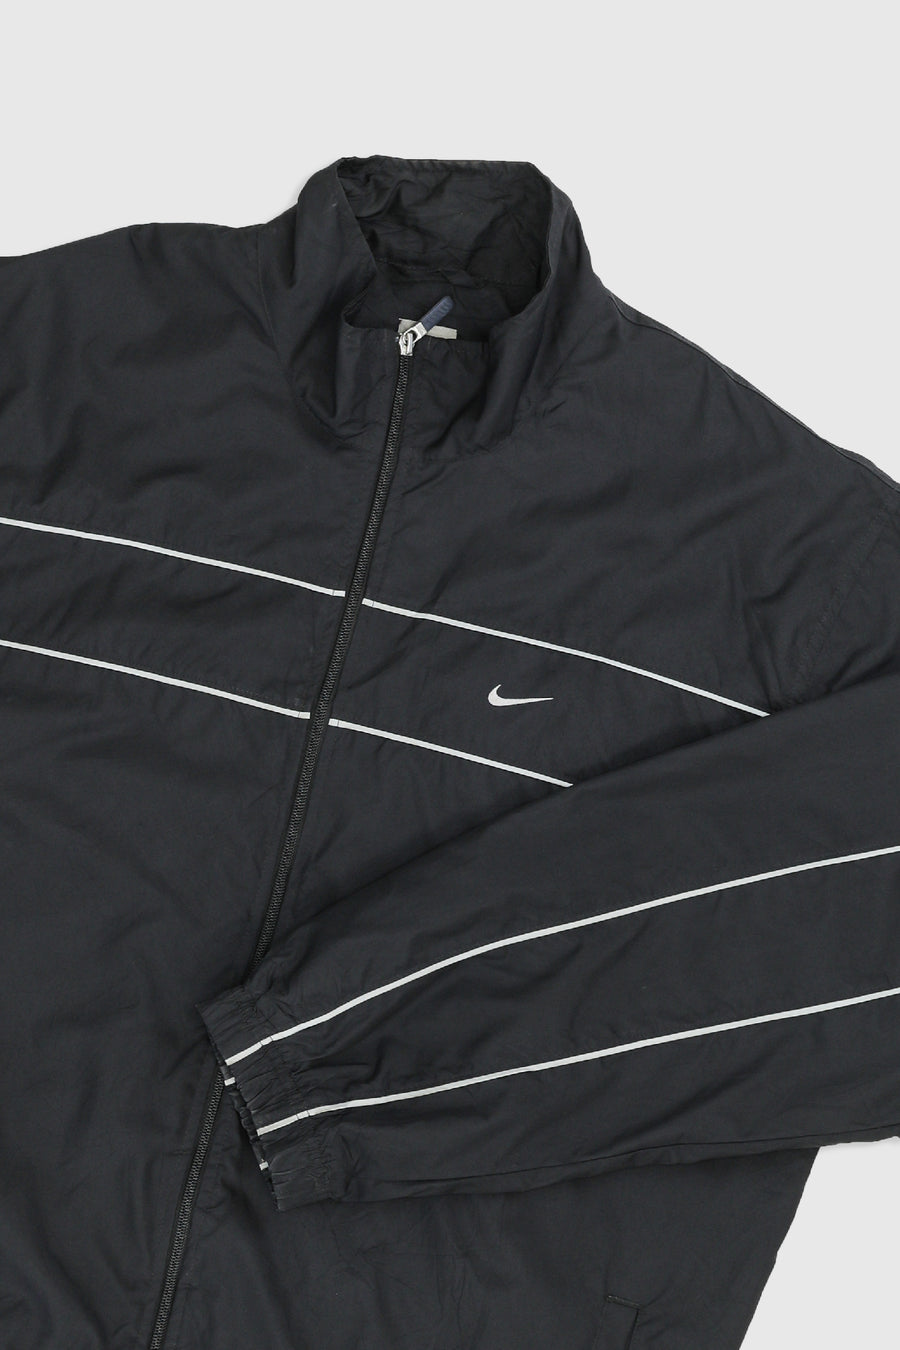 Vintage Nike Windbreaker Jacket